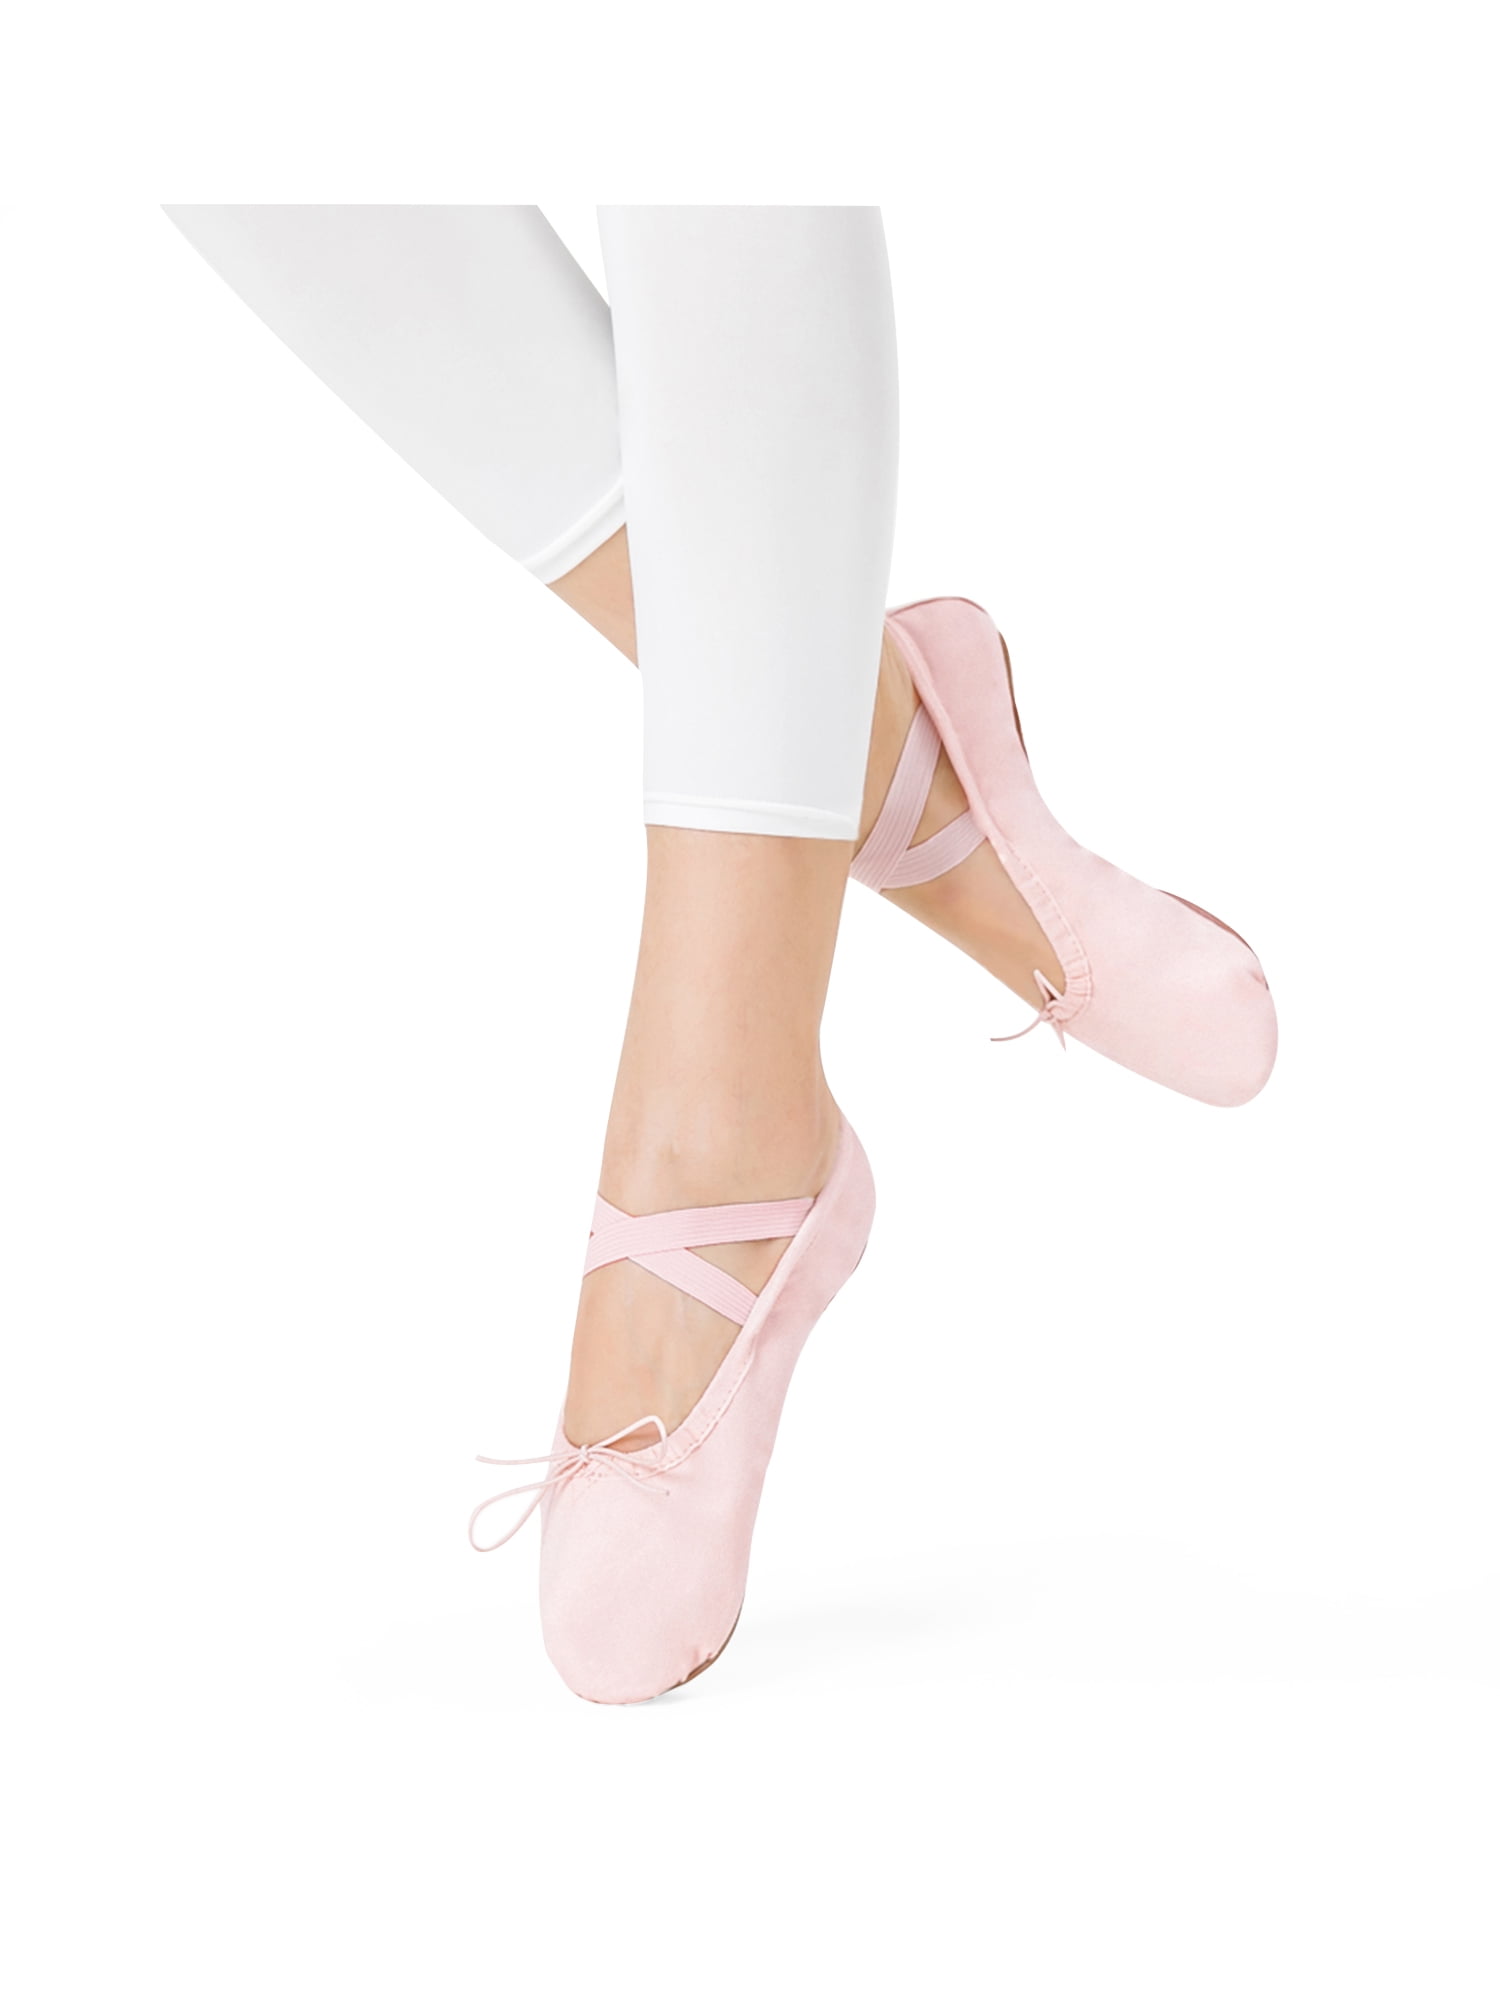 STELLE Ballet Shoes for Girls Toddler Ballet Shoes Canvas Ballet Slippers Dance Yoga Shoes 